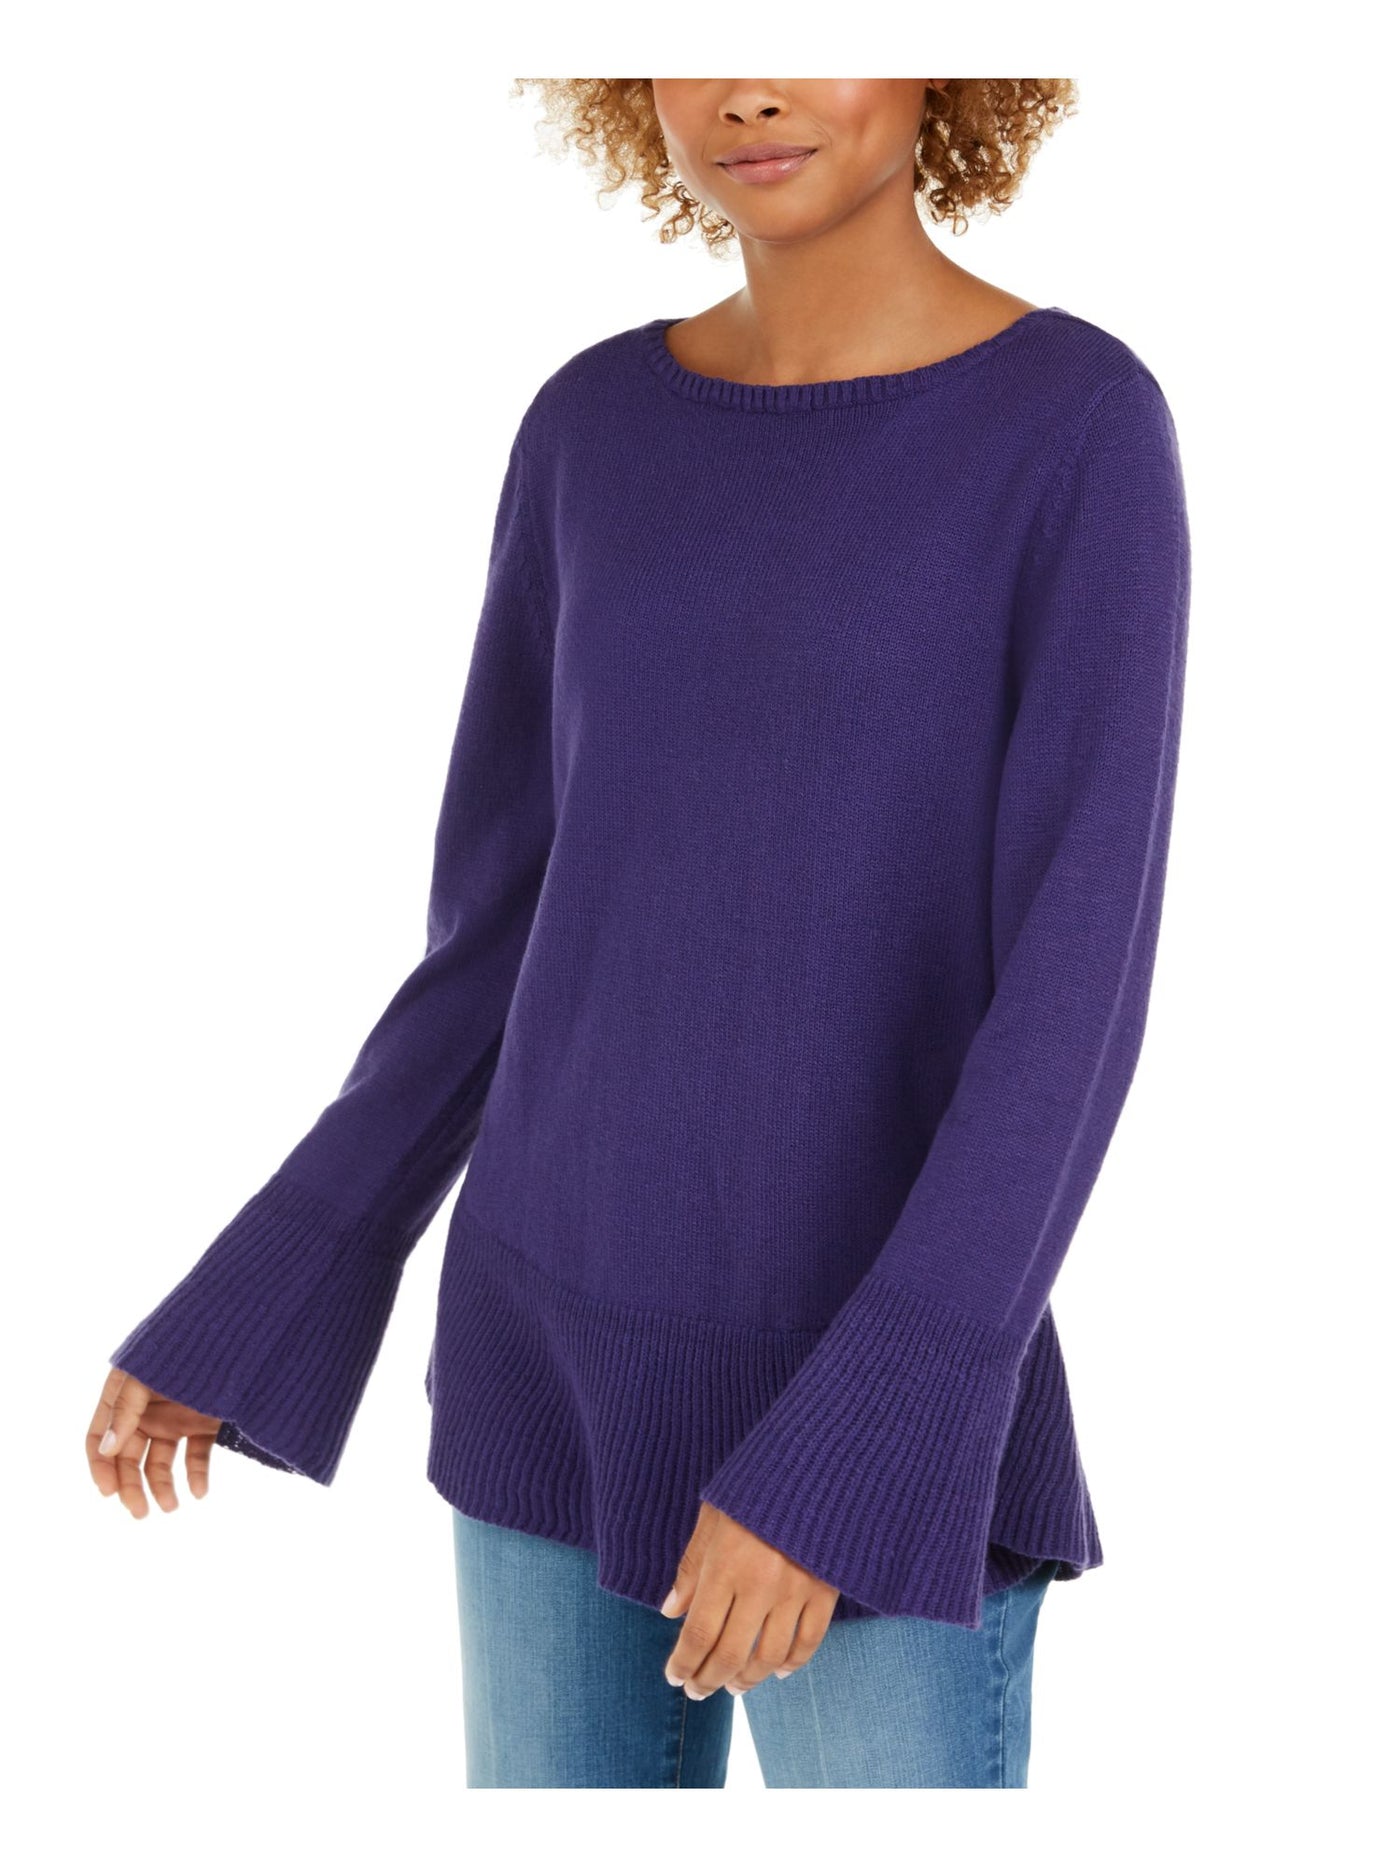 STYLE & COMPANY Womens Purple Bell Sleeve Jewel Neck Sweater Petites Size: PS